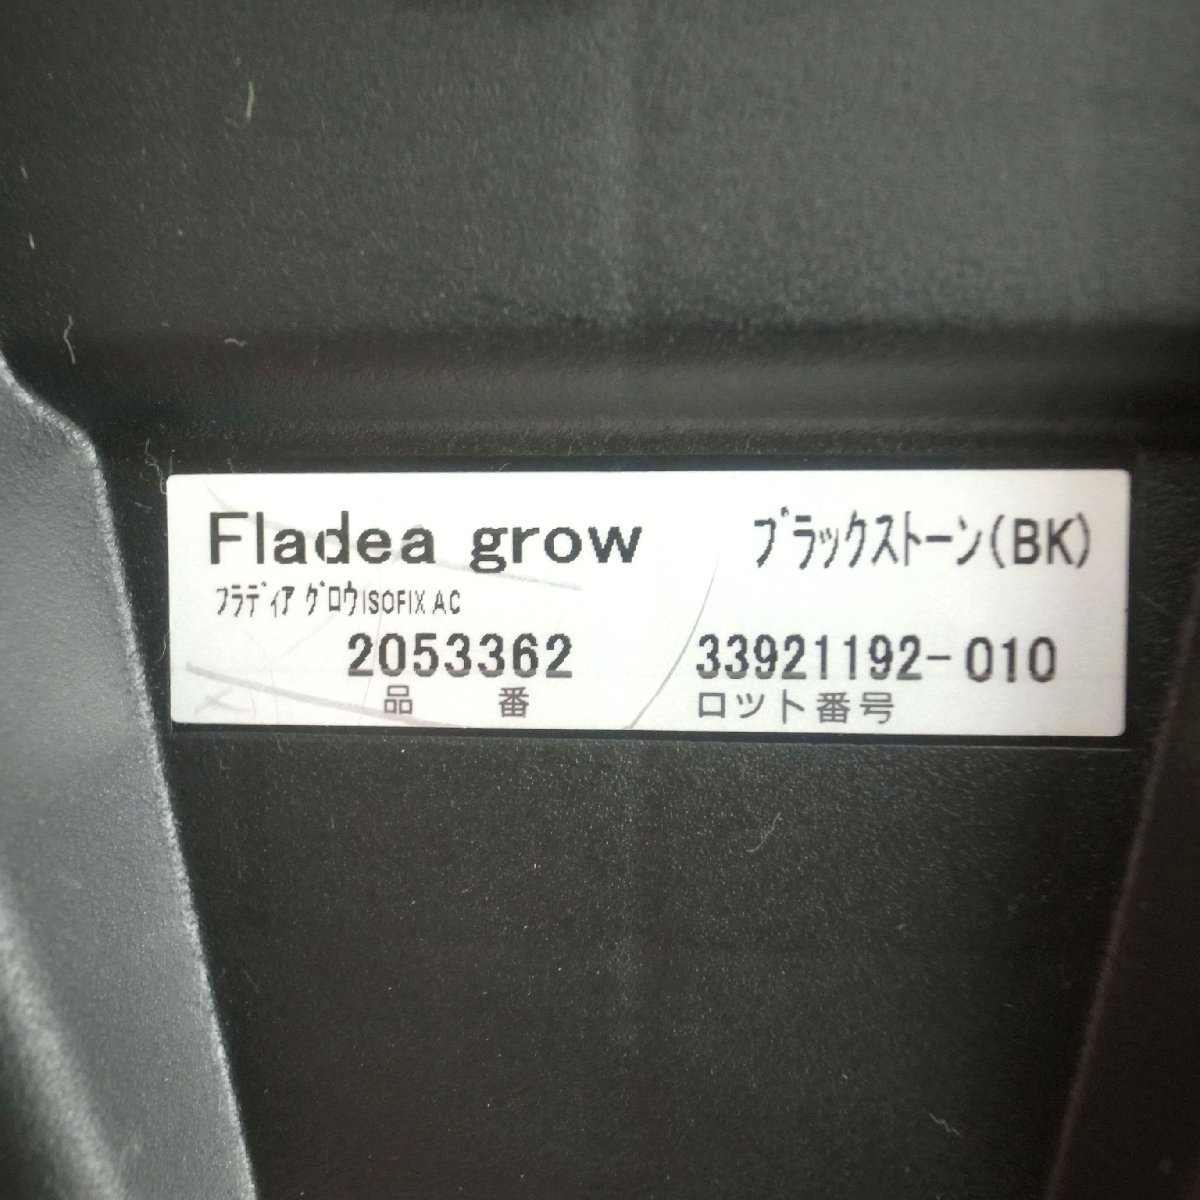 C152T Aprica Aprica Fladea grow Furadia Glo uISOFIX AC 2053362 child seat black Stone (BK) newborn baby ~4 -years old about 